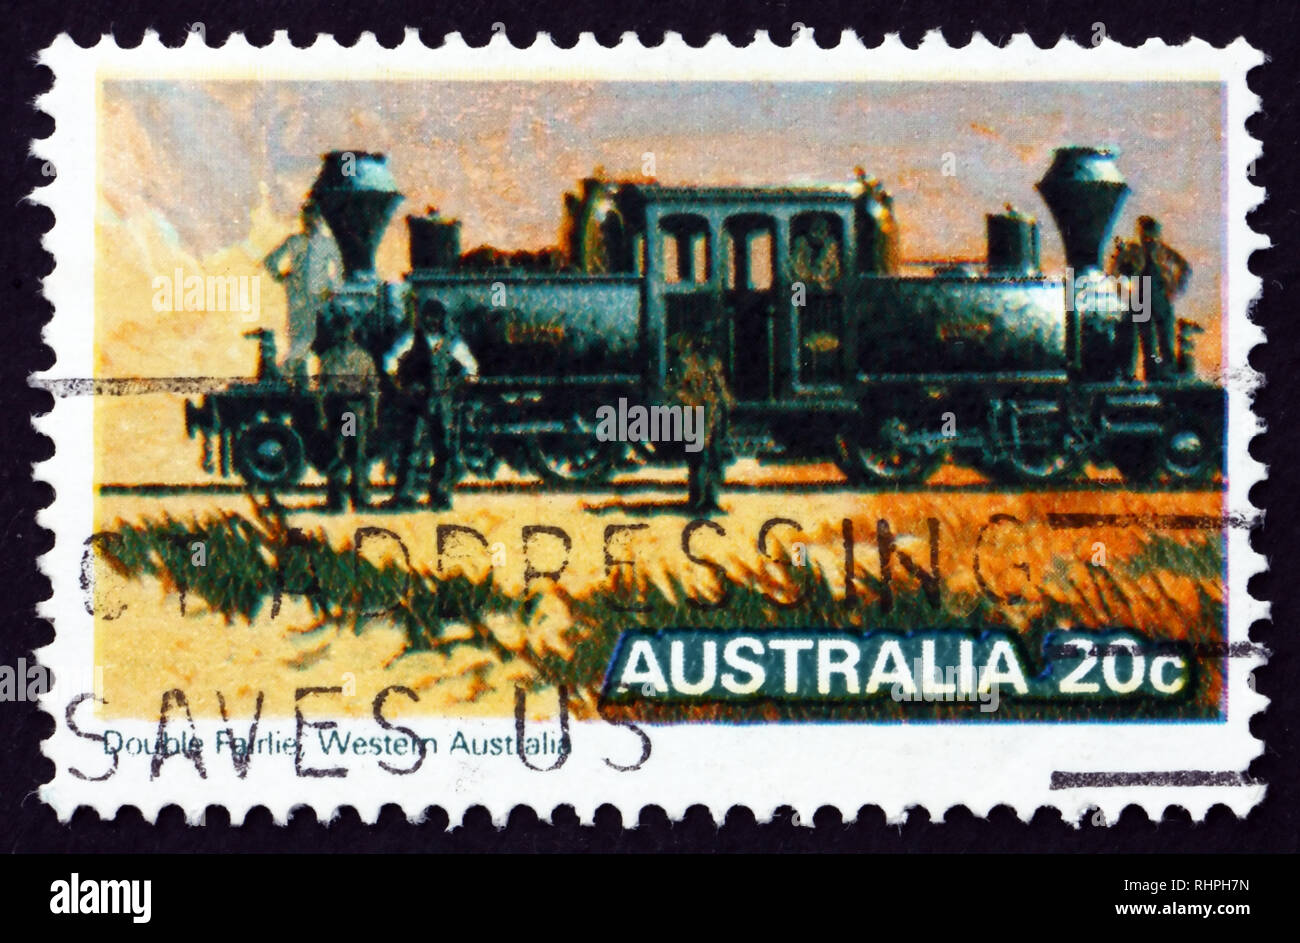 AUSTRALIA - CIRCA 1979: a stamp printed in the Australia shows Double Fairlie, Australian Steam Locomotive, circa 1979 Stock Photo